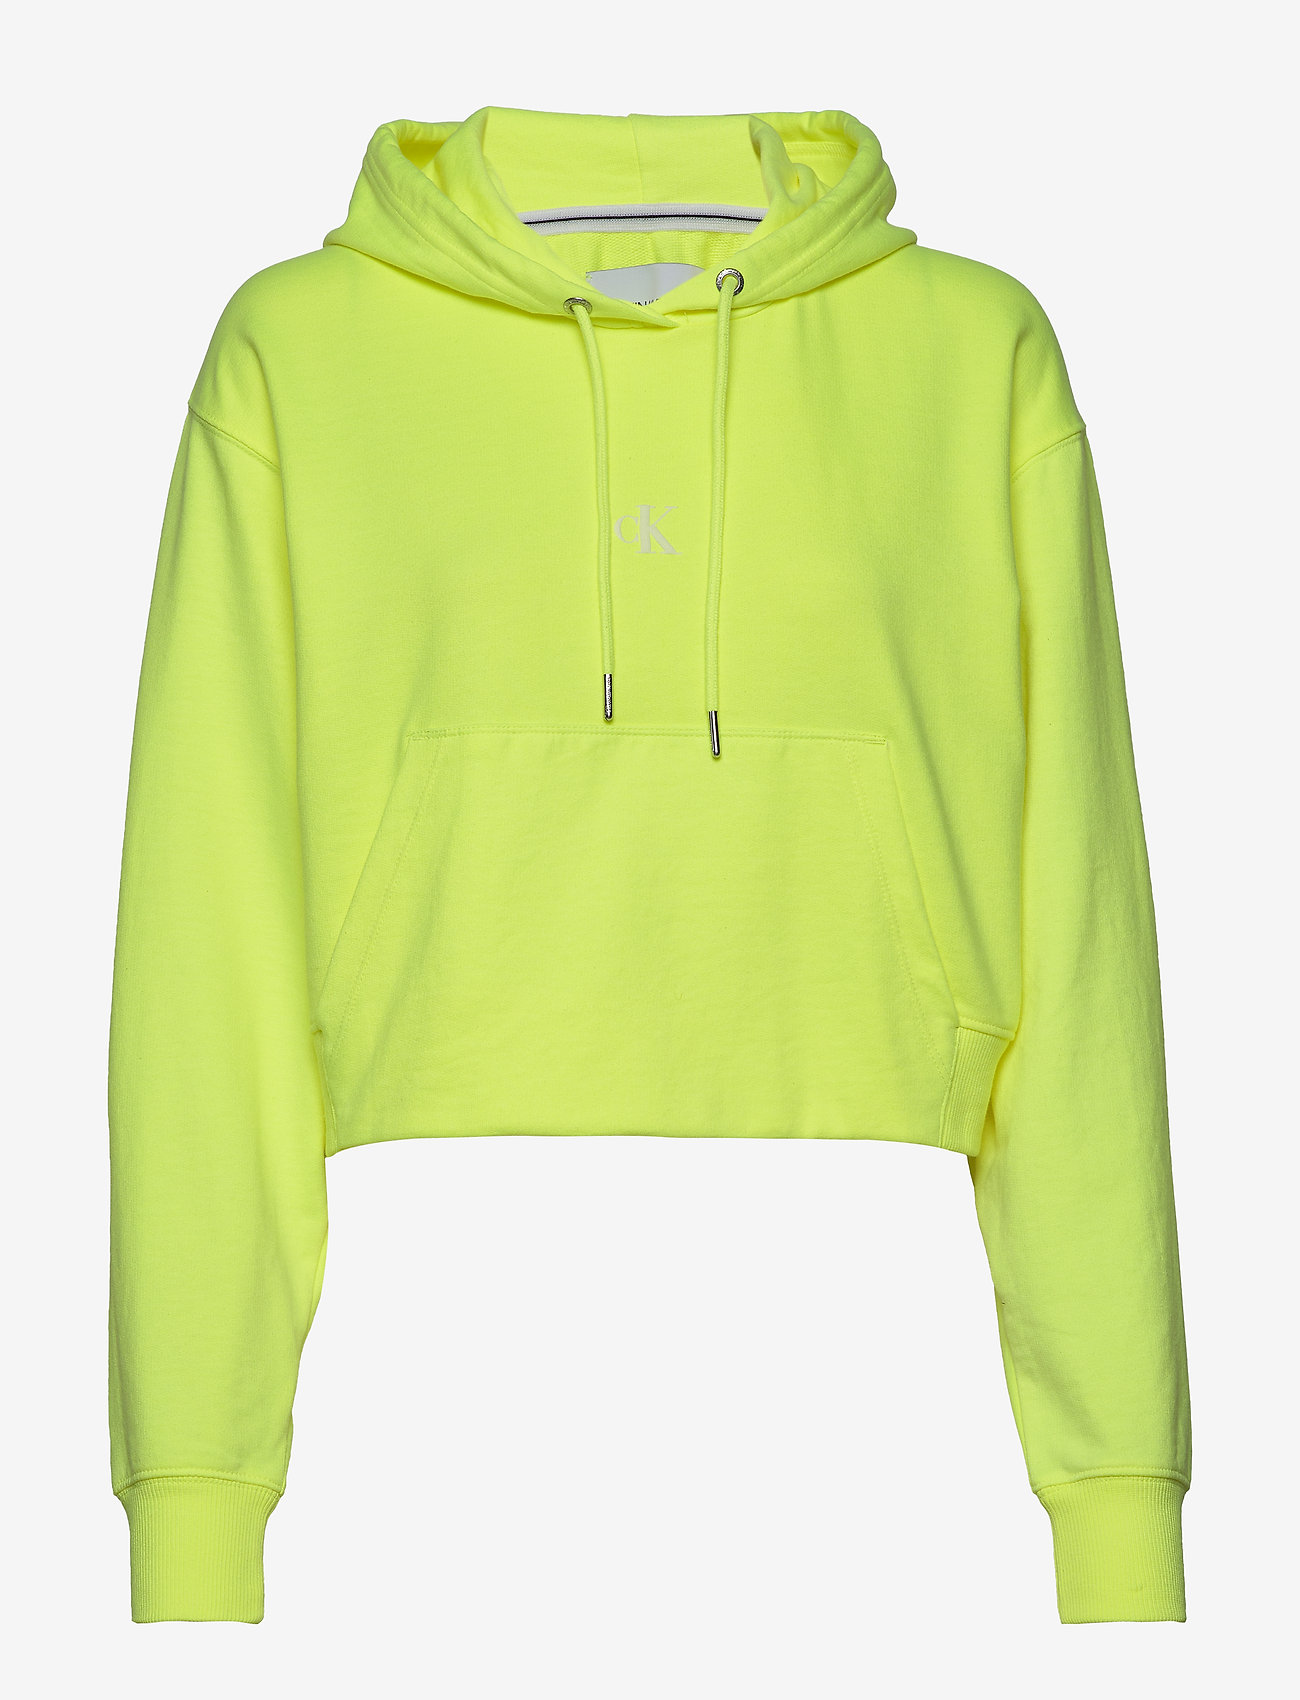 calvin klein yellow hoodie